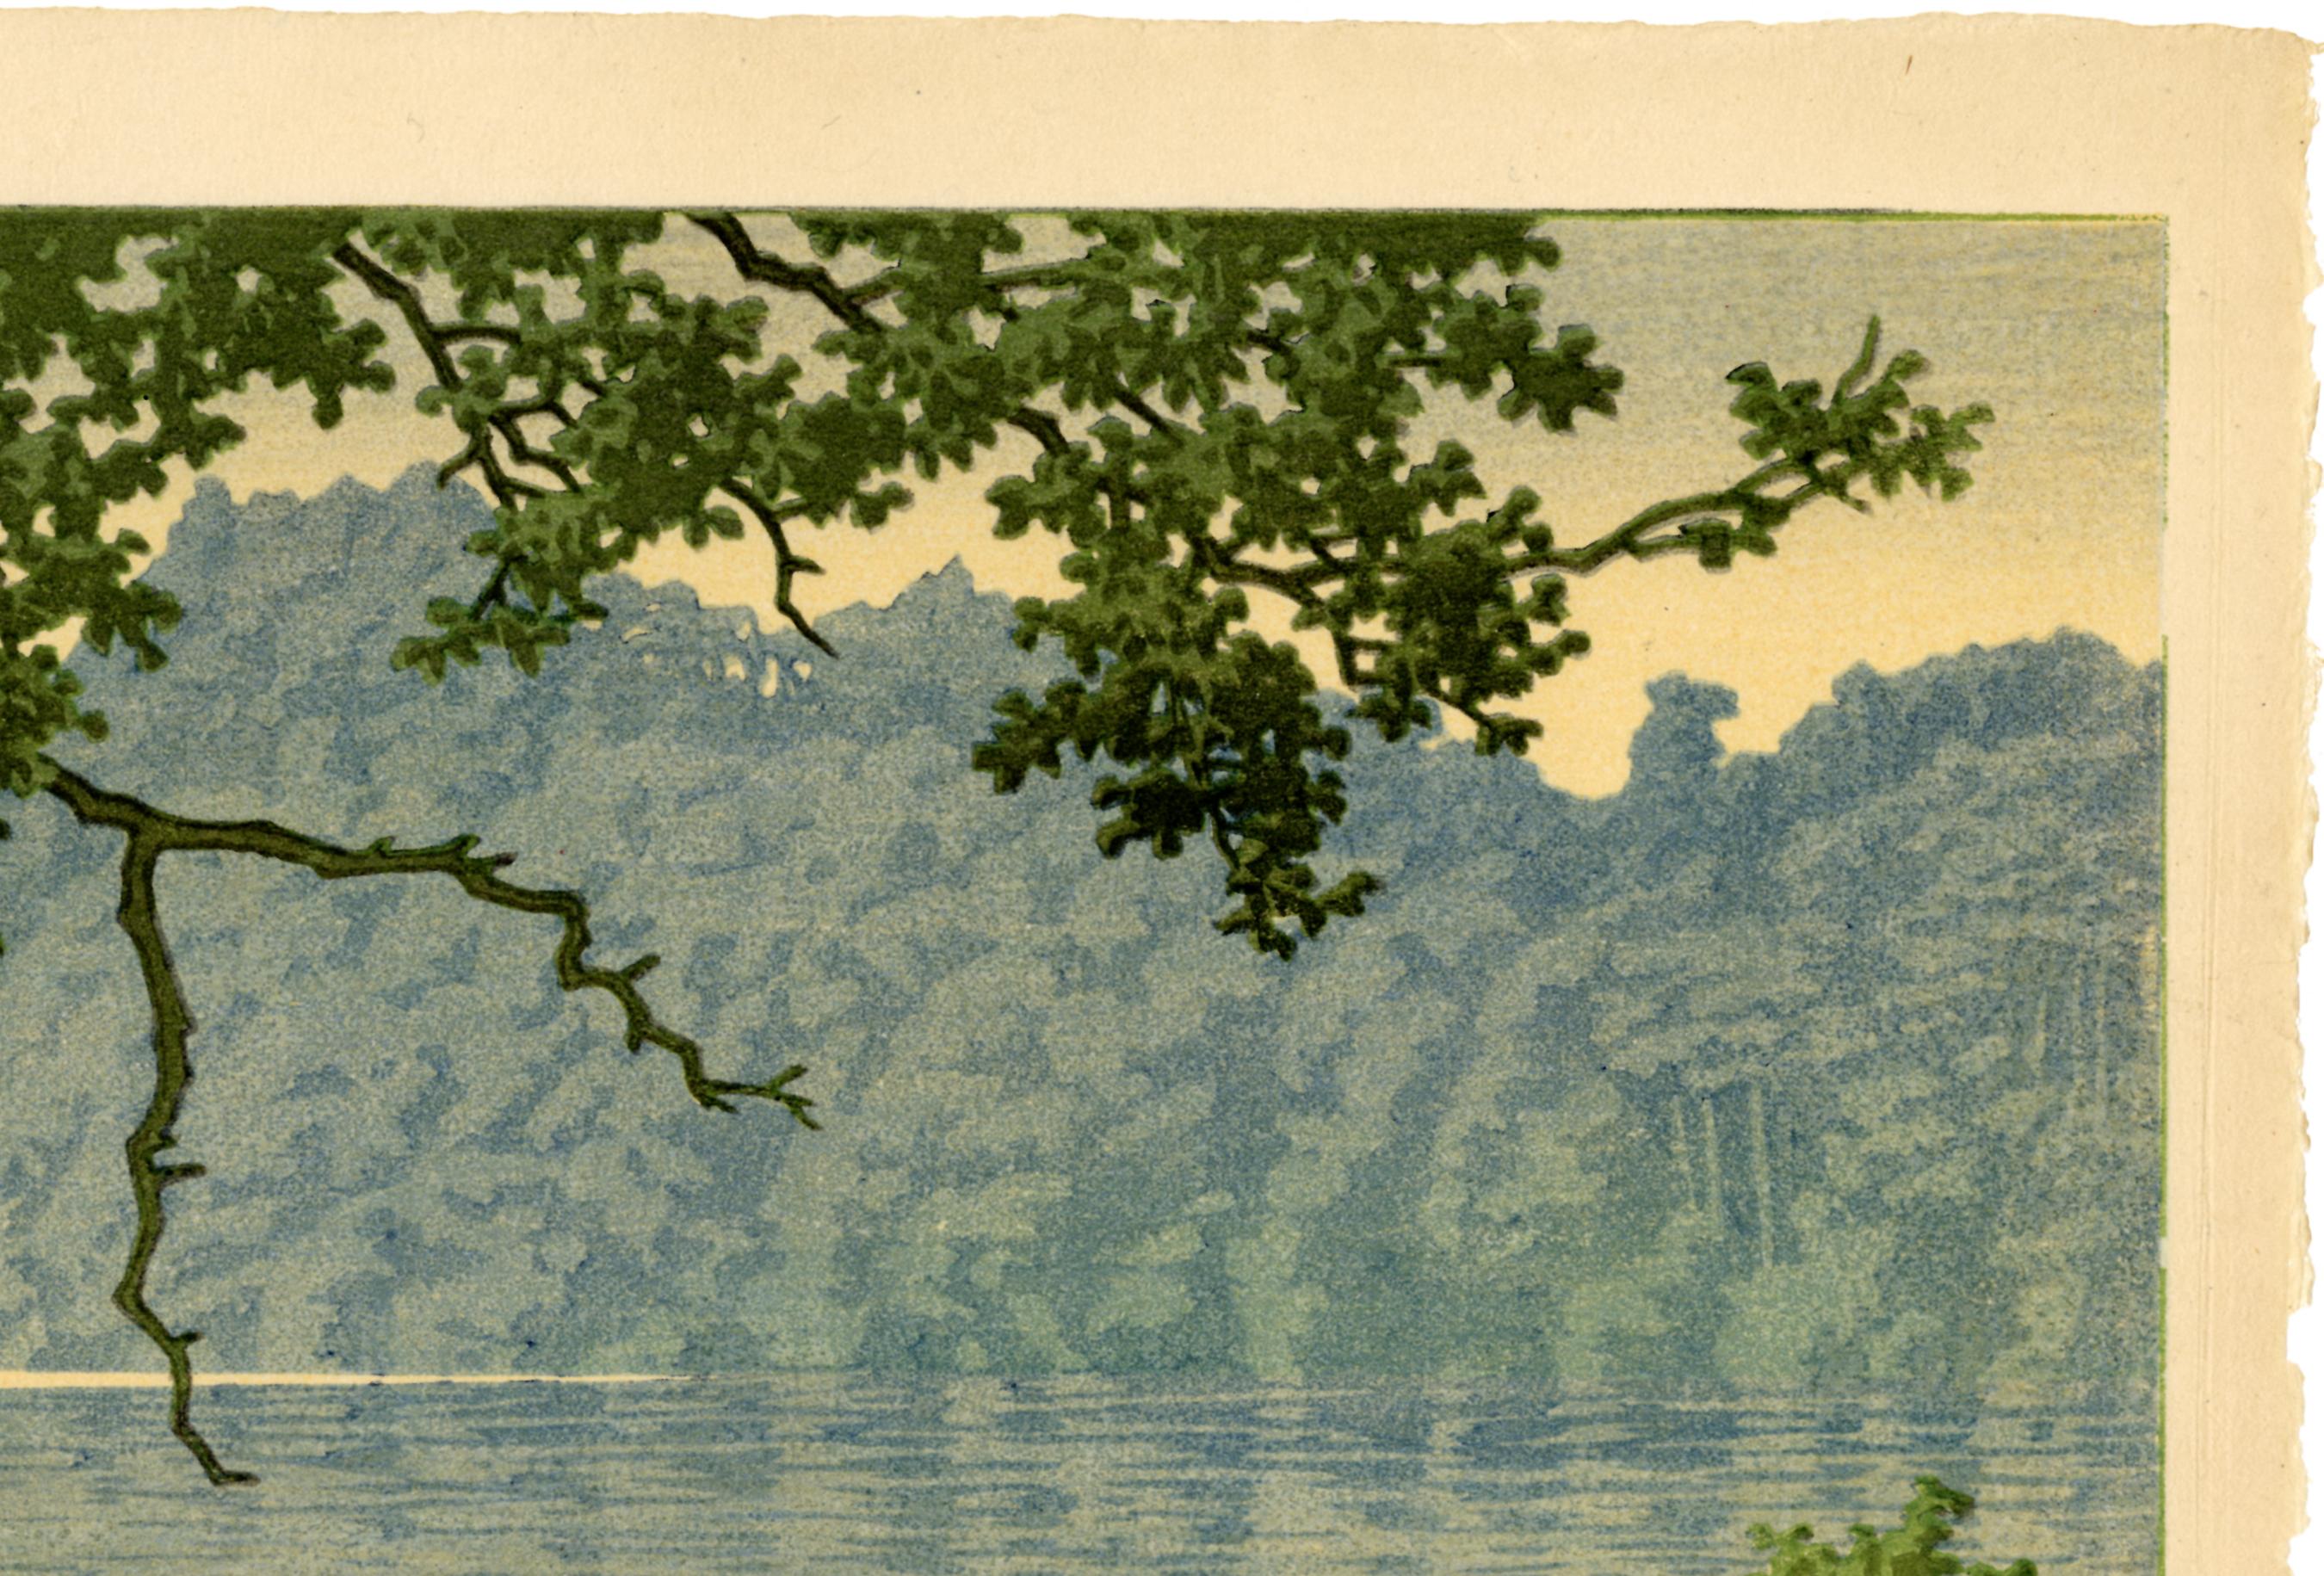 Man Fishing on Lake Matsubara, Shinshu - Showa Print by Kawase Hasui